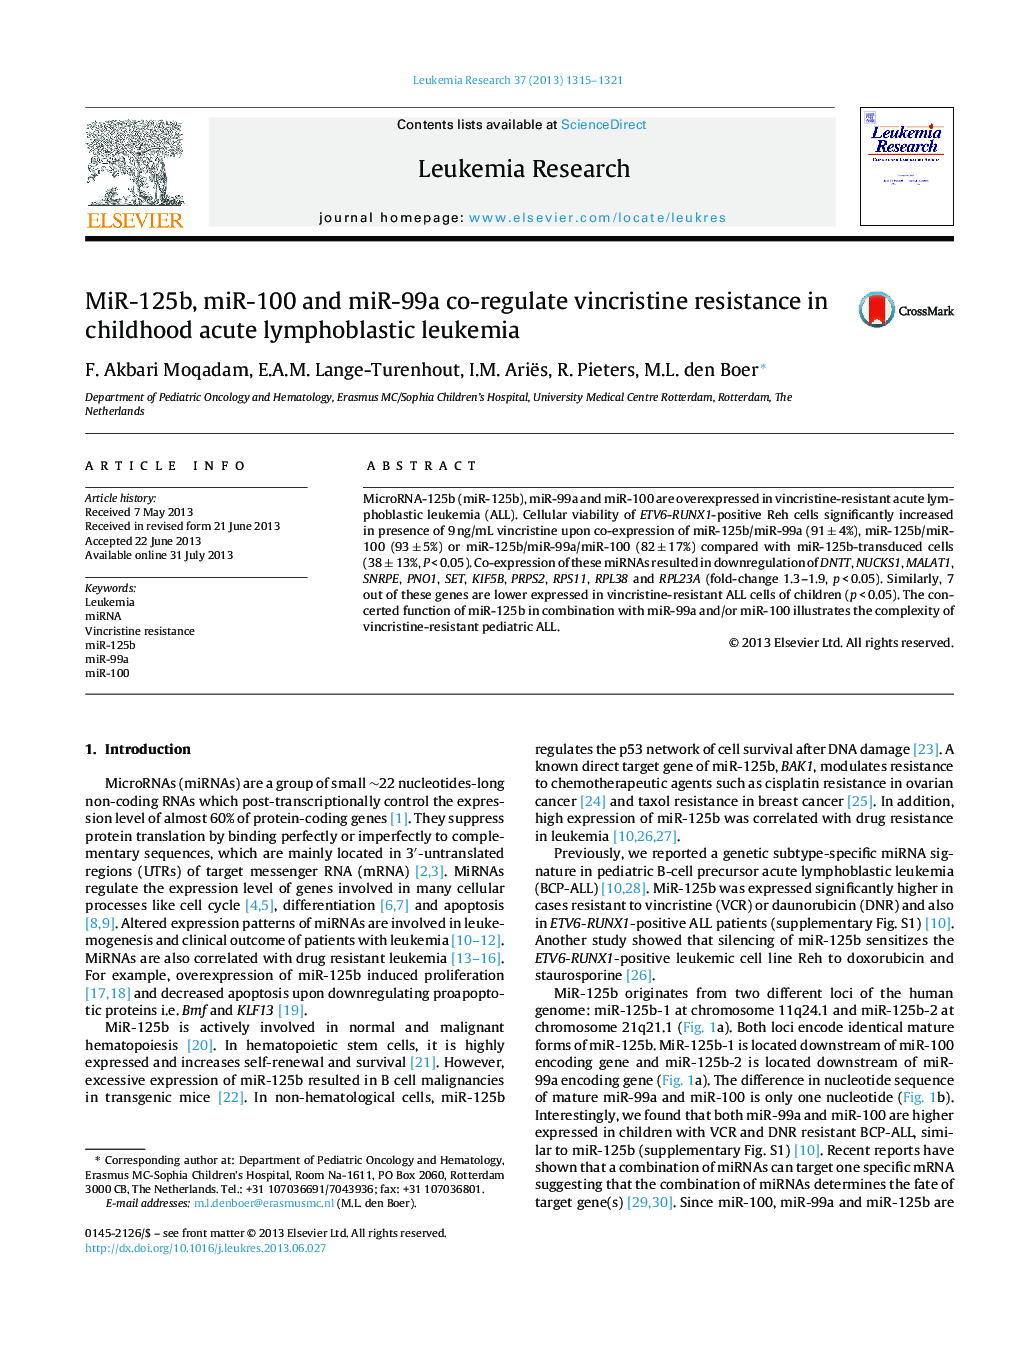 MiR-125b, miR-100 and miR-99a co-regulate vincristine resistance in childhood acute lymphoblastic leukemia